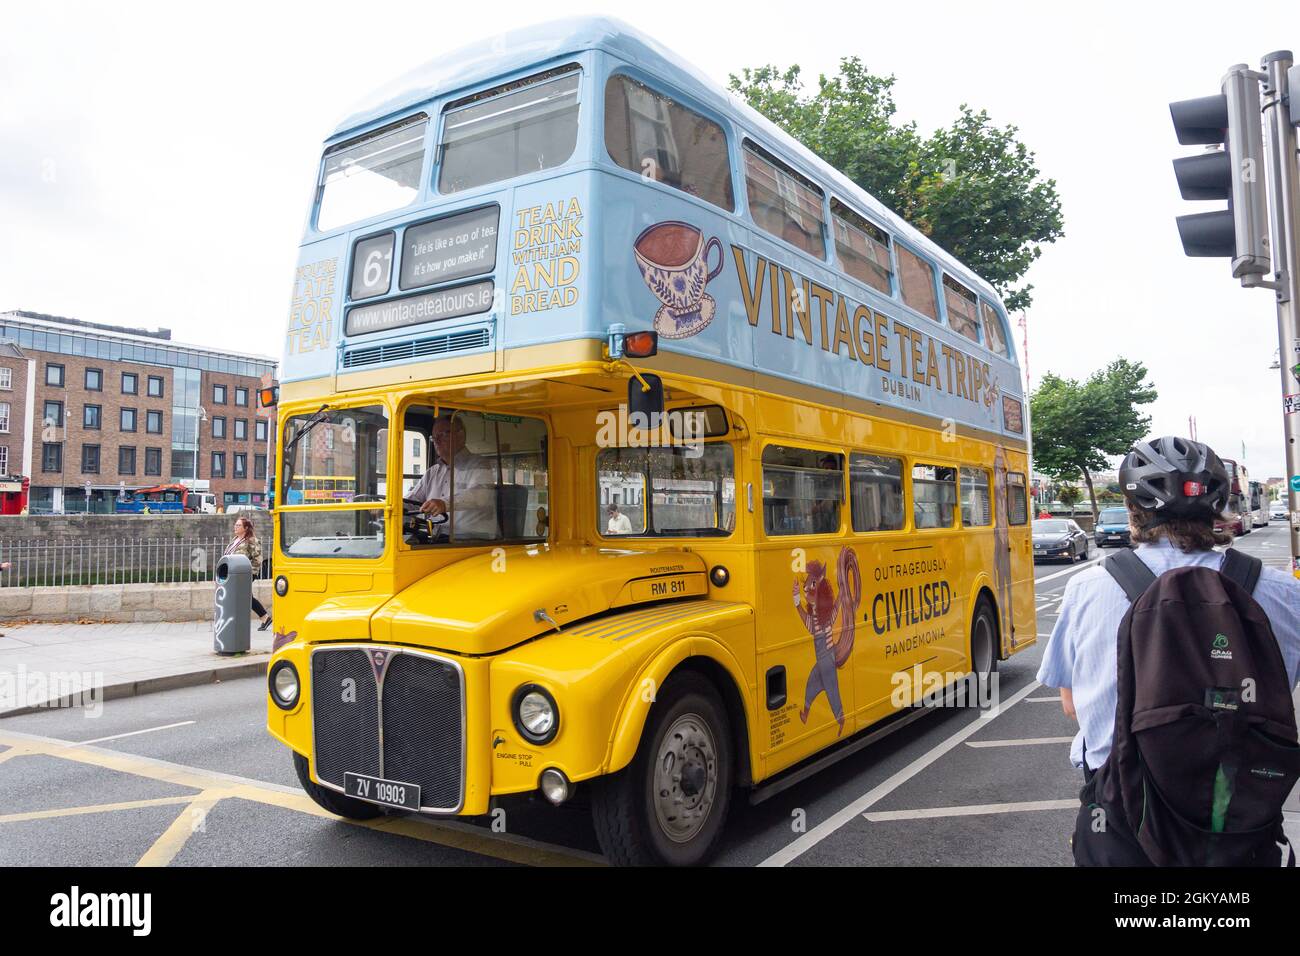 Vintage Tea Trips bus, Ormond Quay Lower, North City, Dublino, Repubblica d'Irlanda Foto Stock